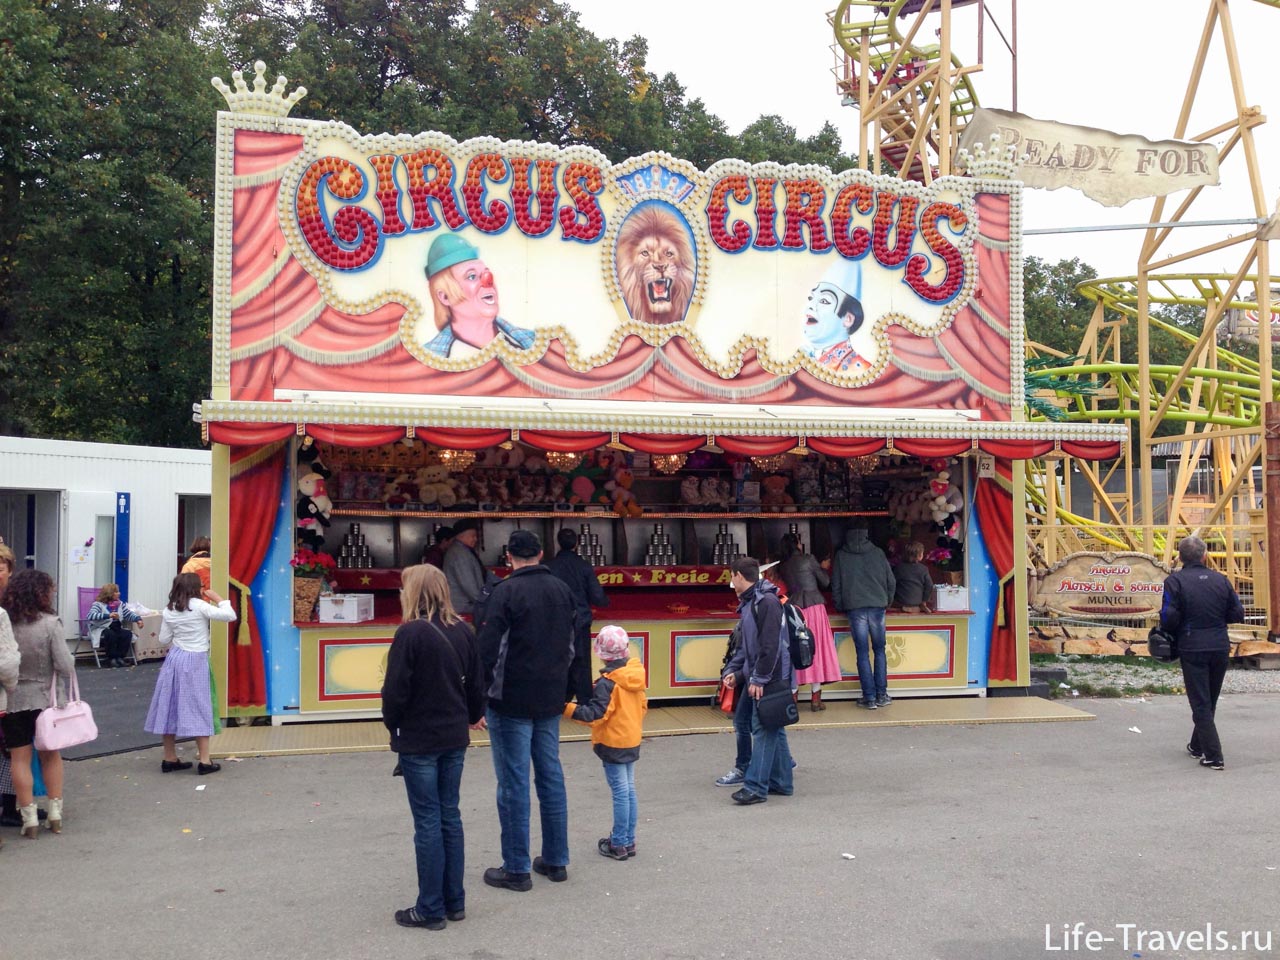 Attractions Circus Oktoberfest